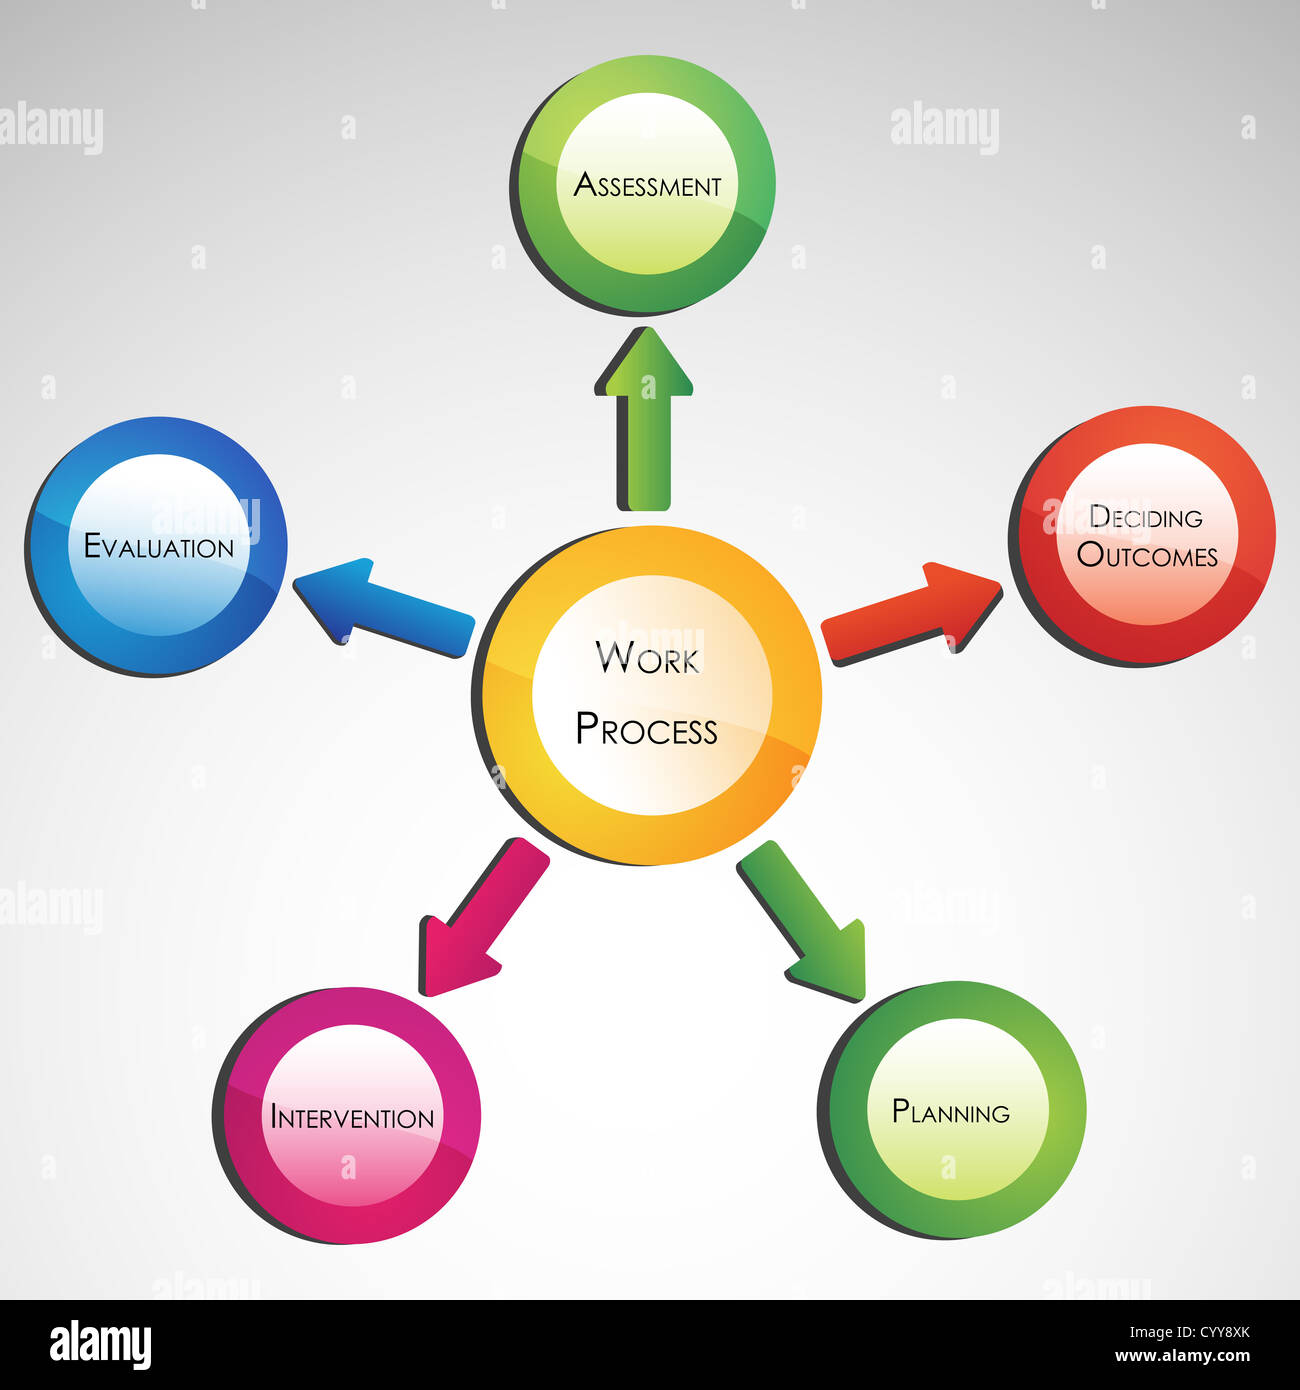 illustration of work process diagram Stock Photo